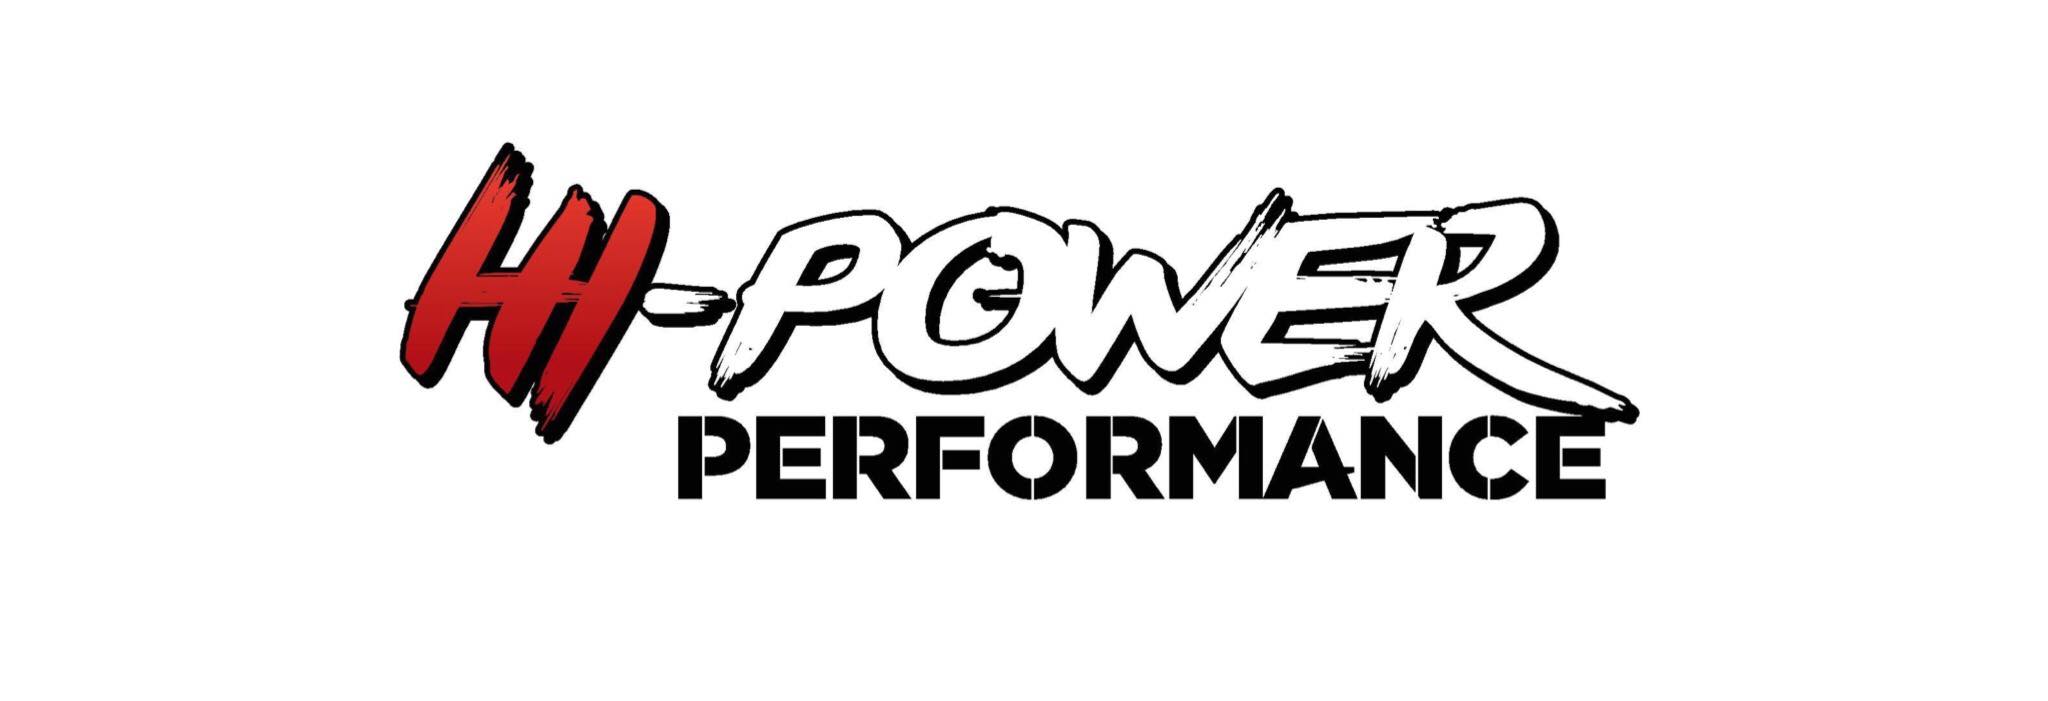 high-power-performance